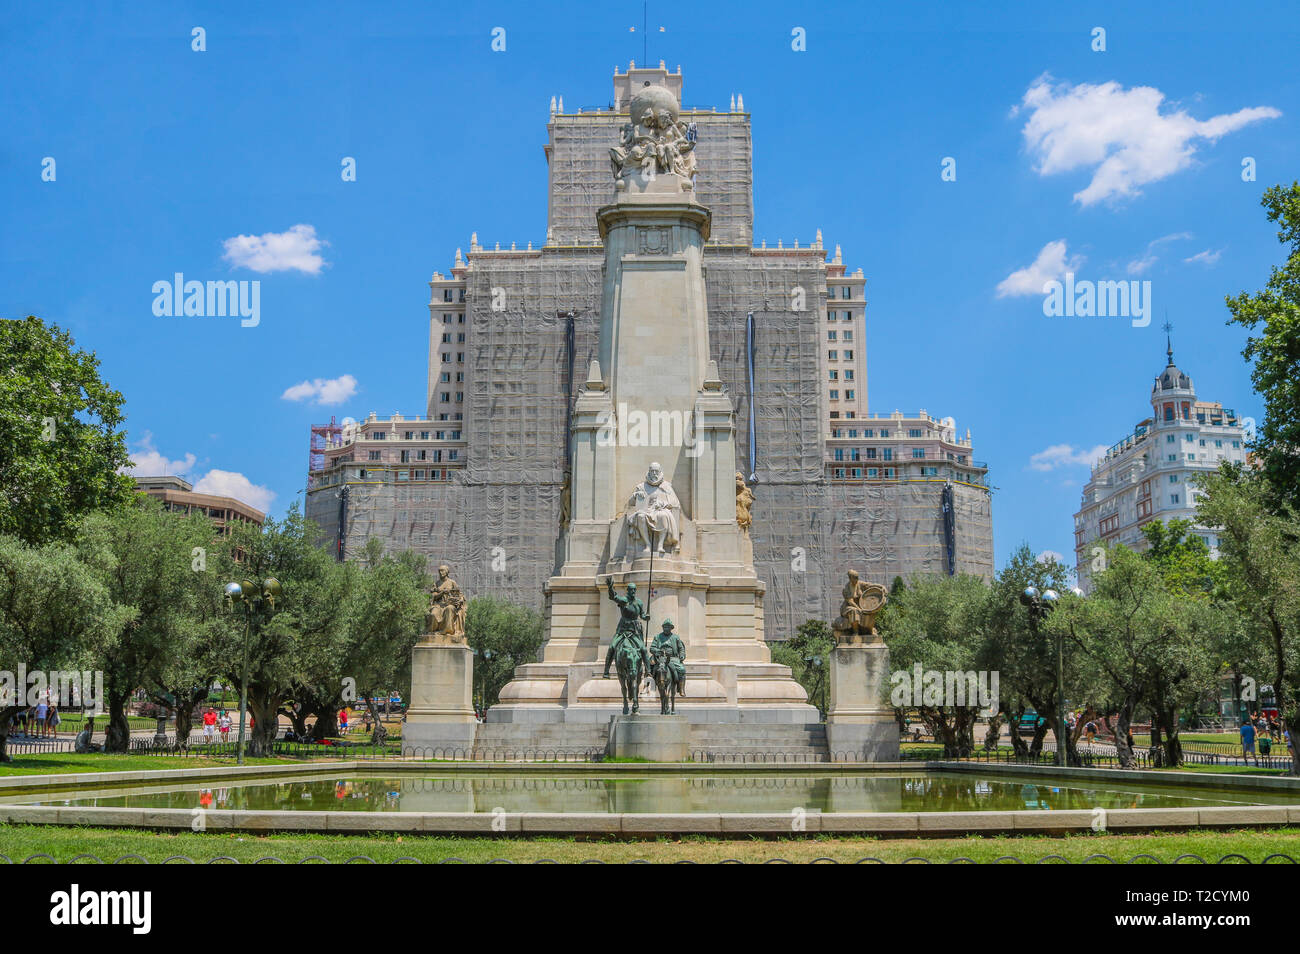 Monumento Cervantes upfront. Behind is the Edificio España under reparations. Shoot in July 2018 Stock Photo